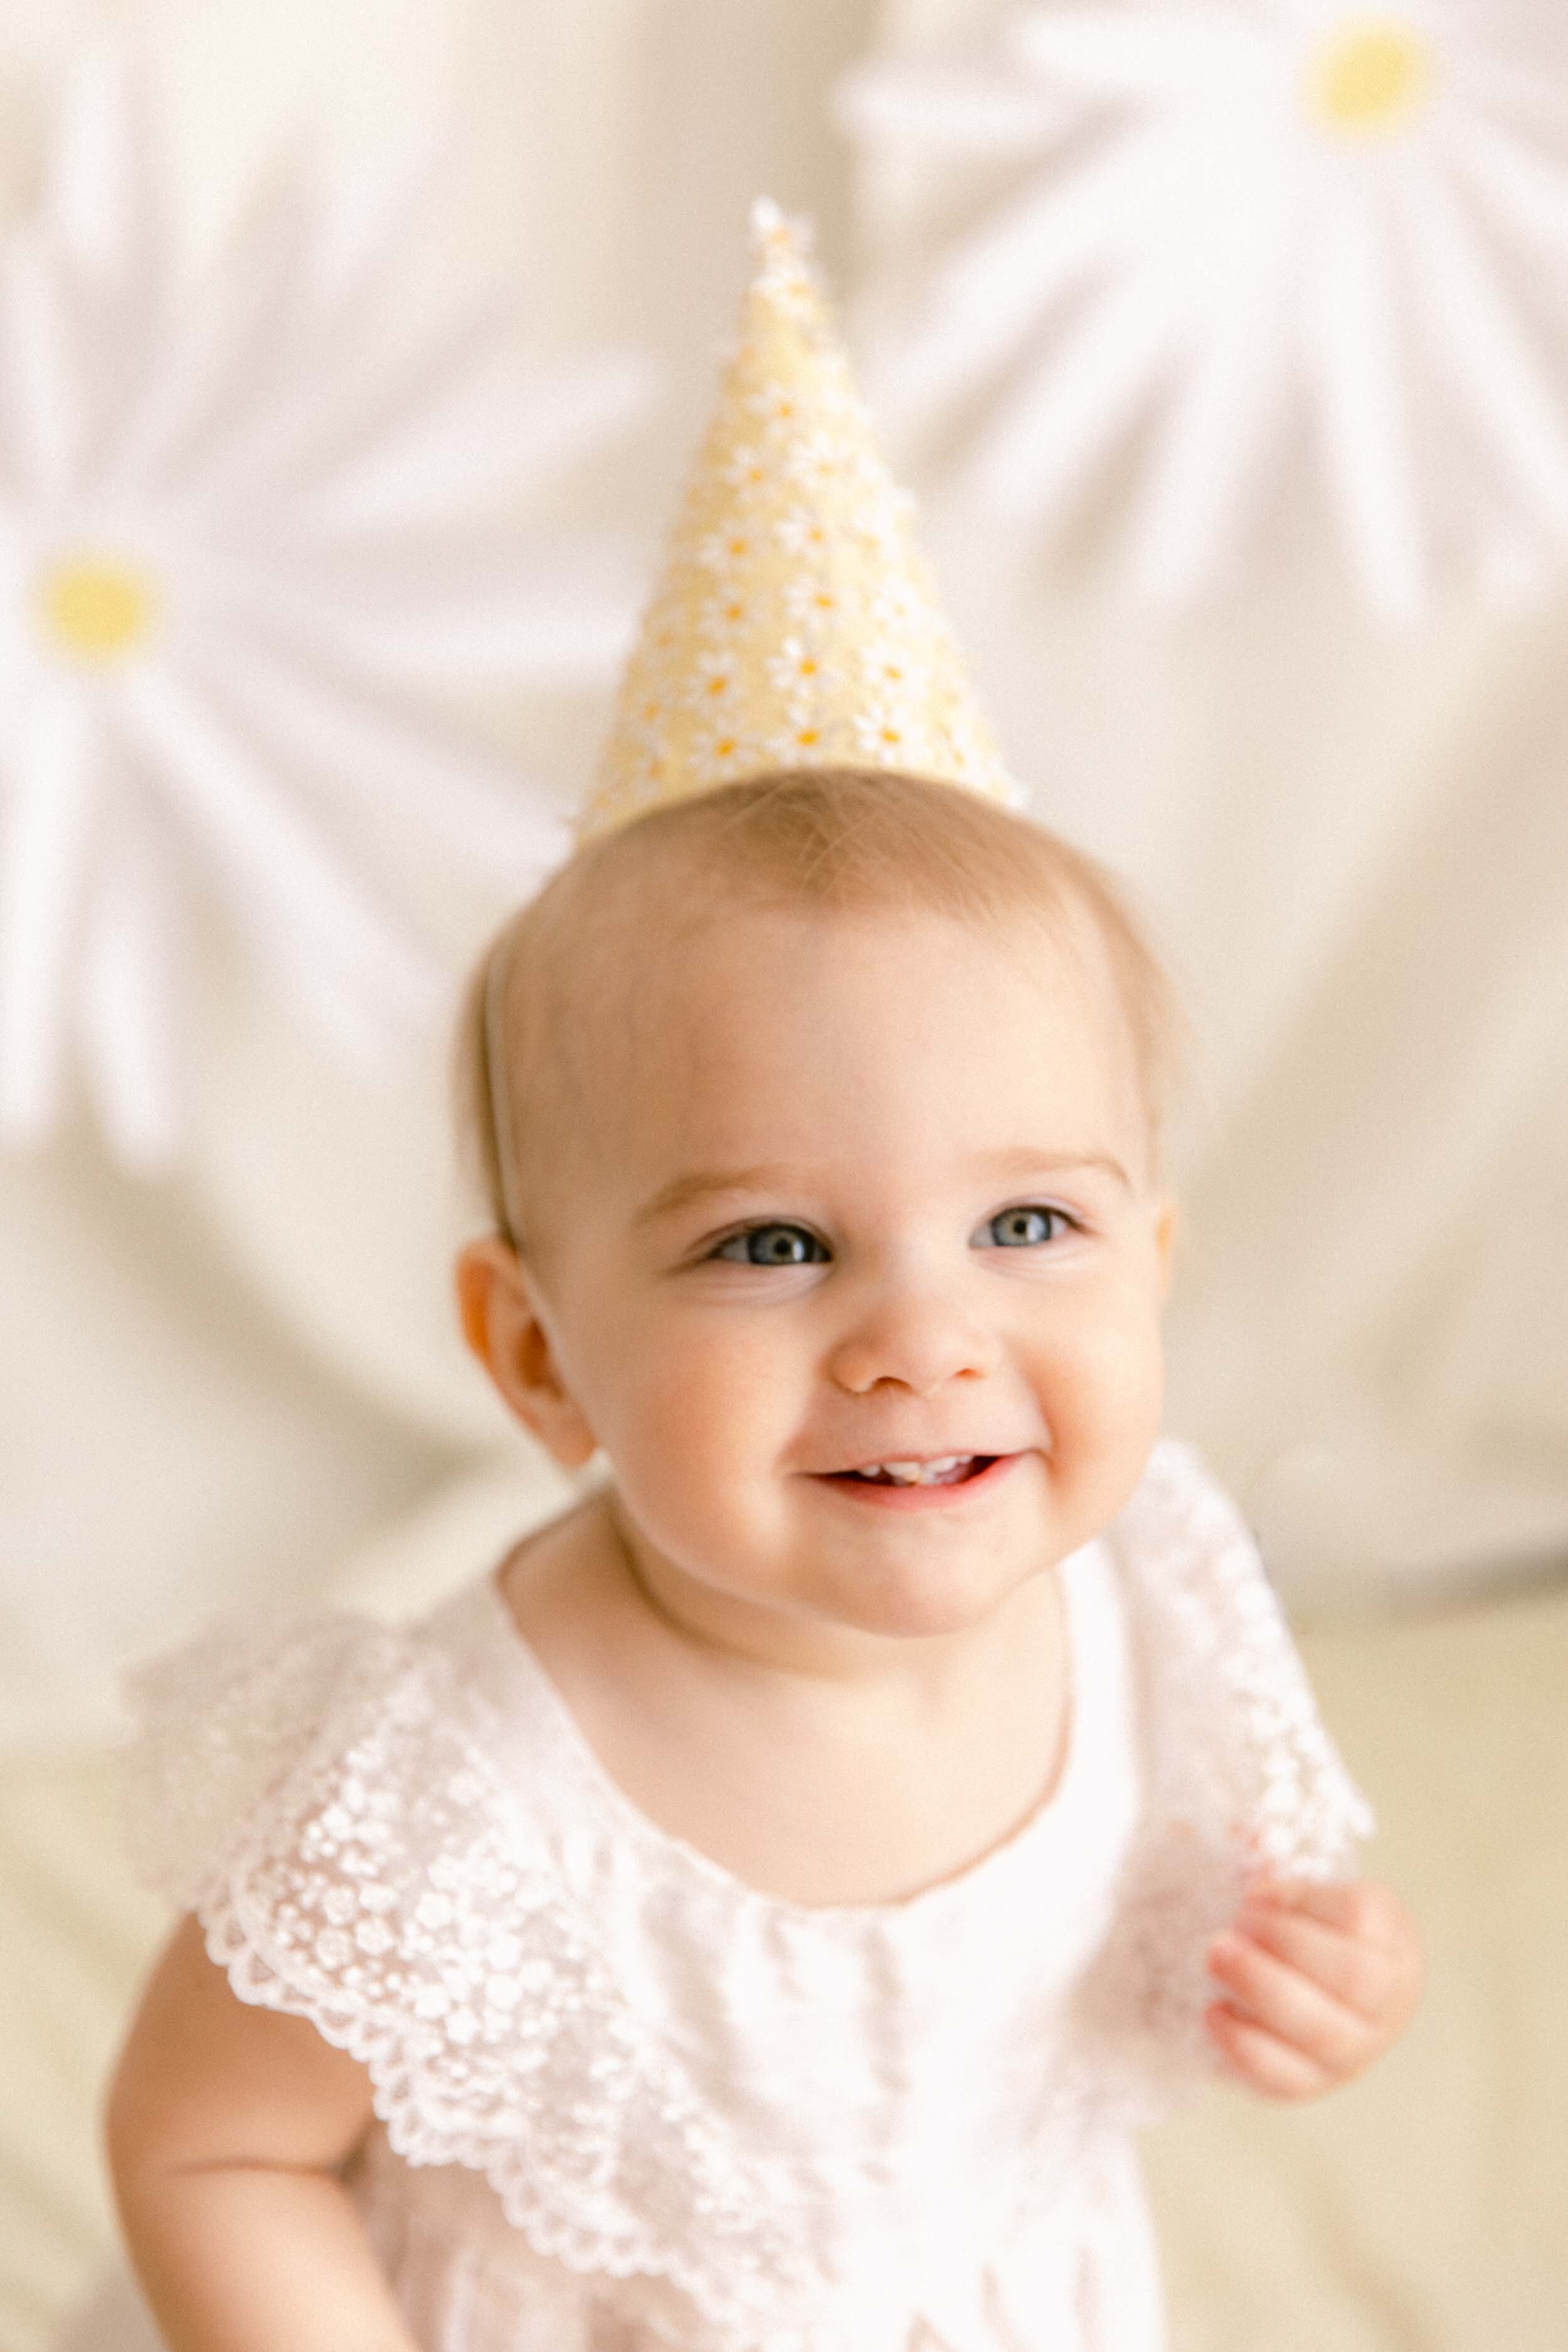 Baby's first birthday daisy themed party inspiration Calgary Photographer Jennie Guenard Photography